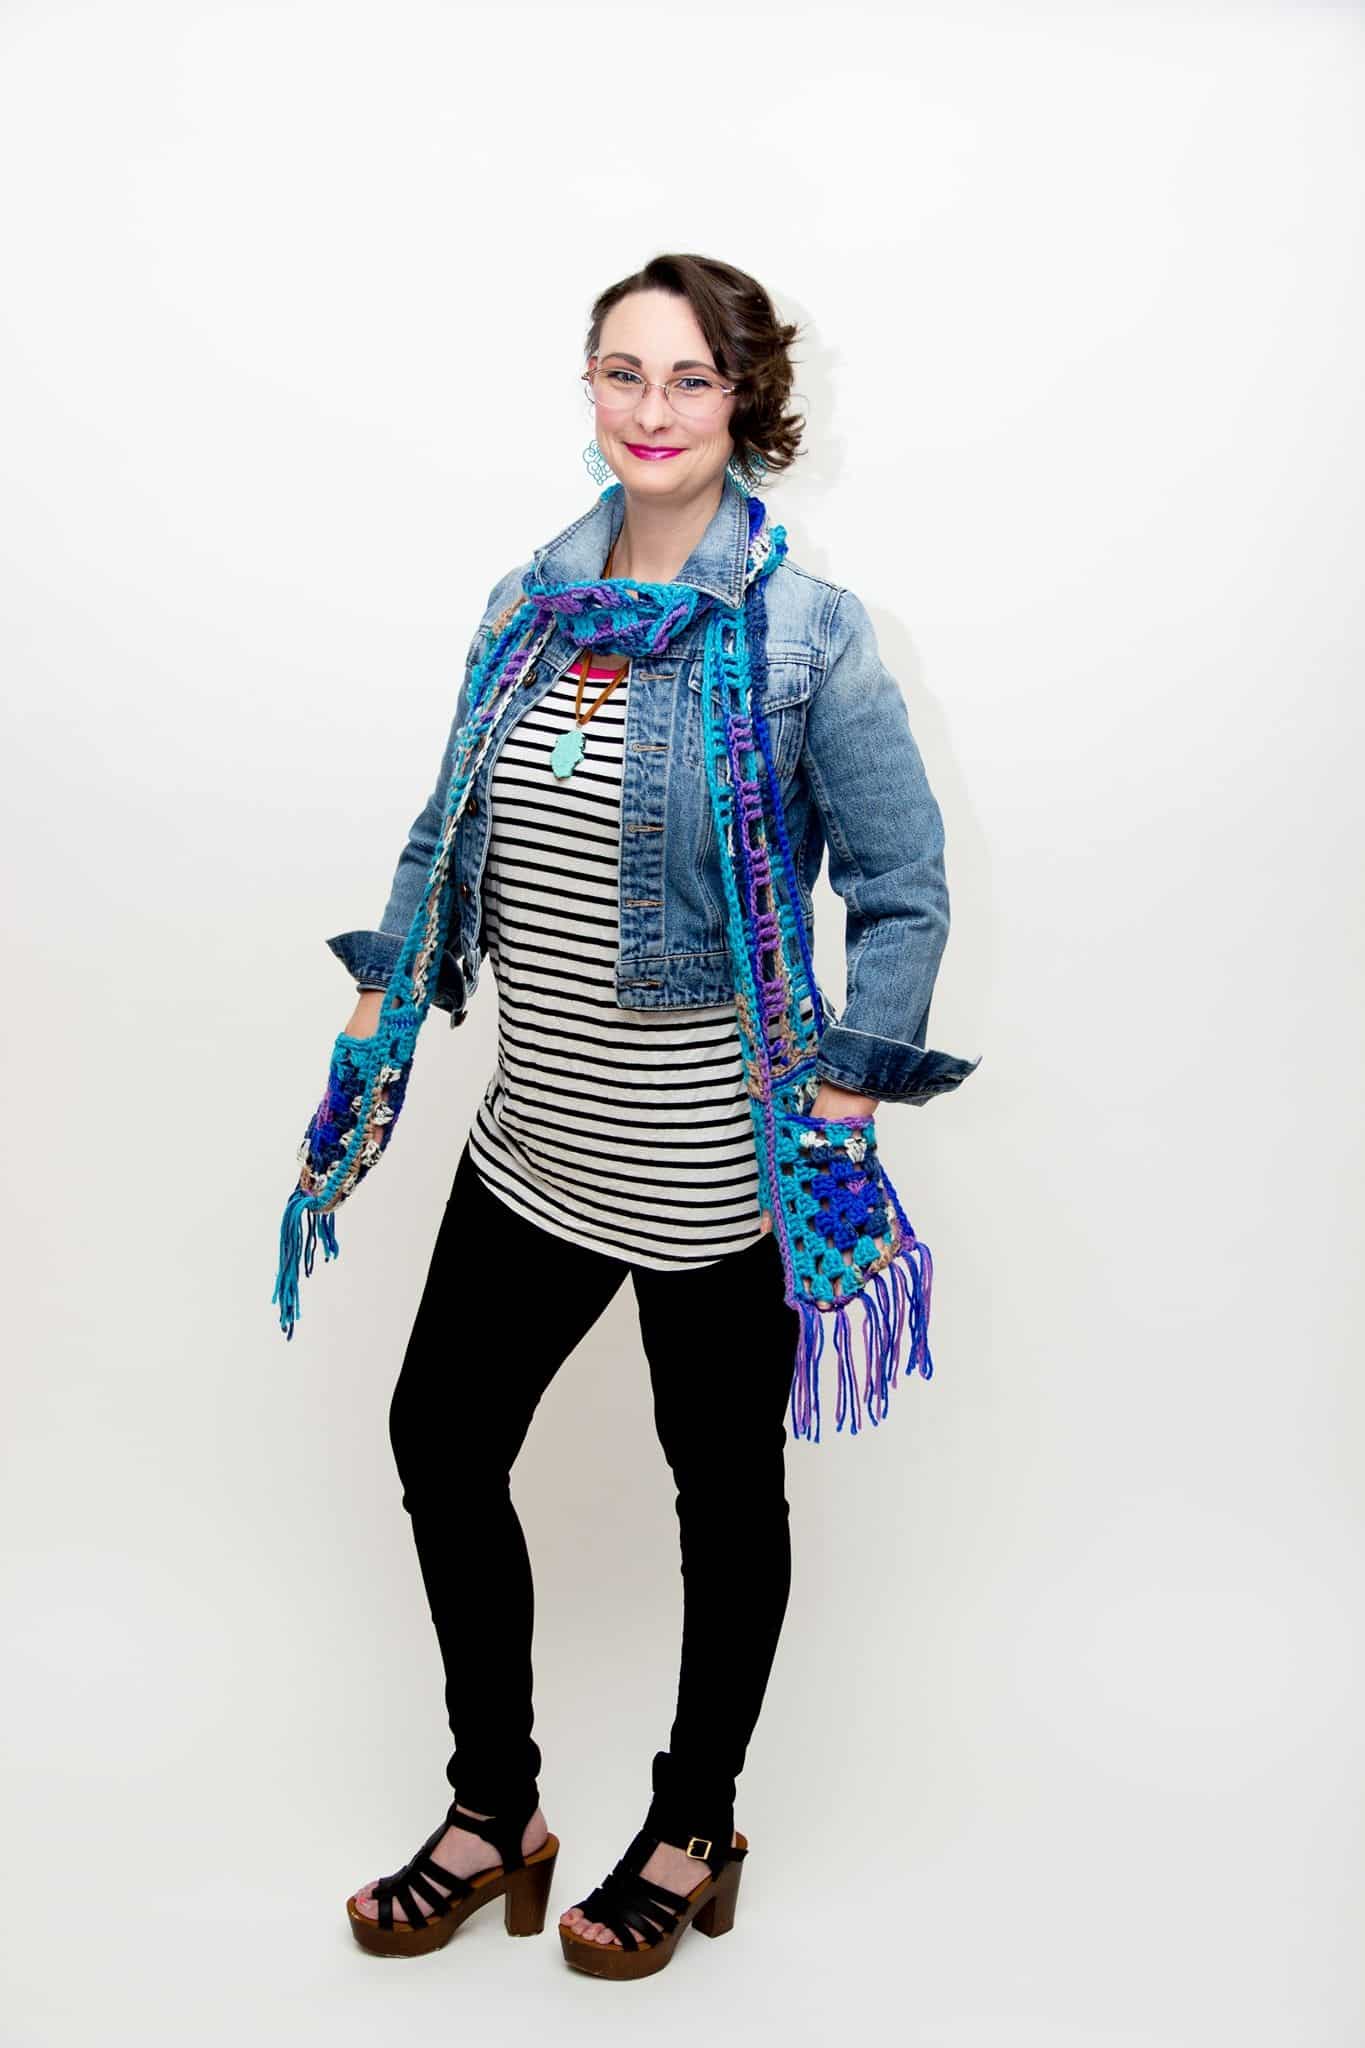 Professional member feature - Amanda Woodbury - American Crochet Association